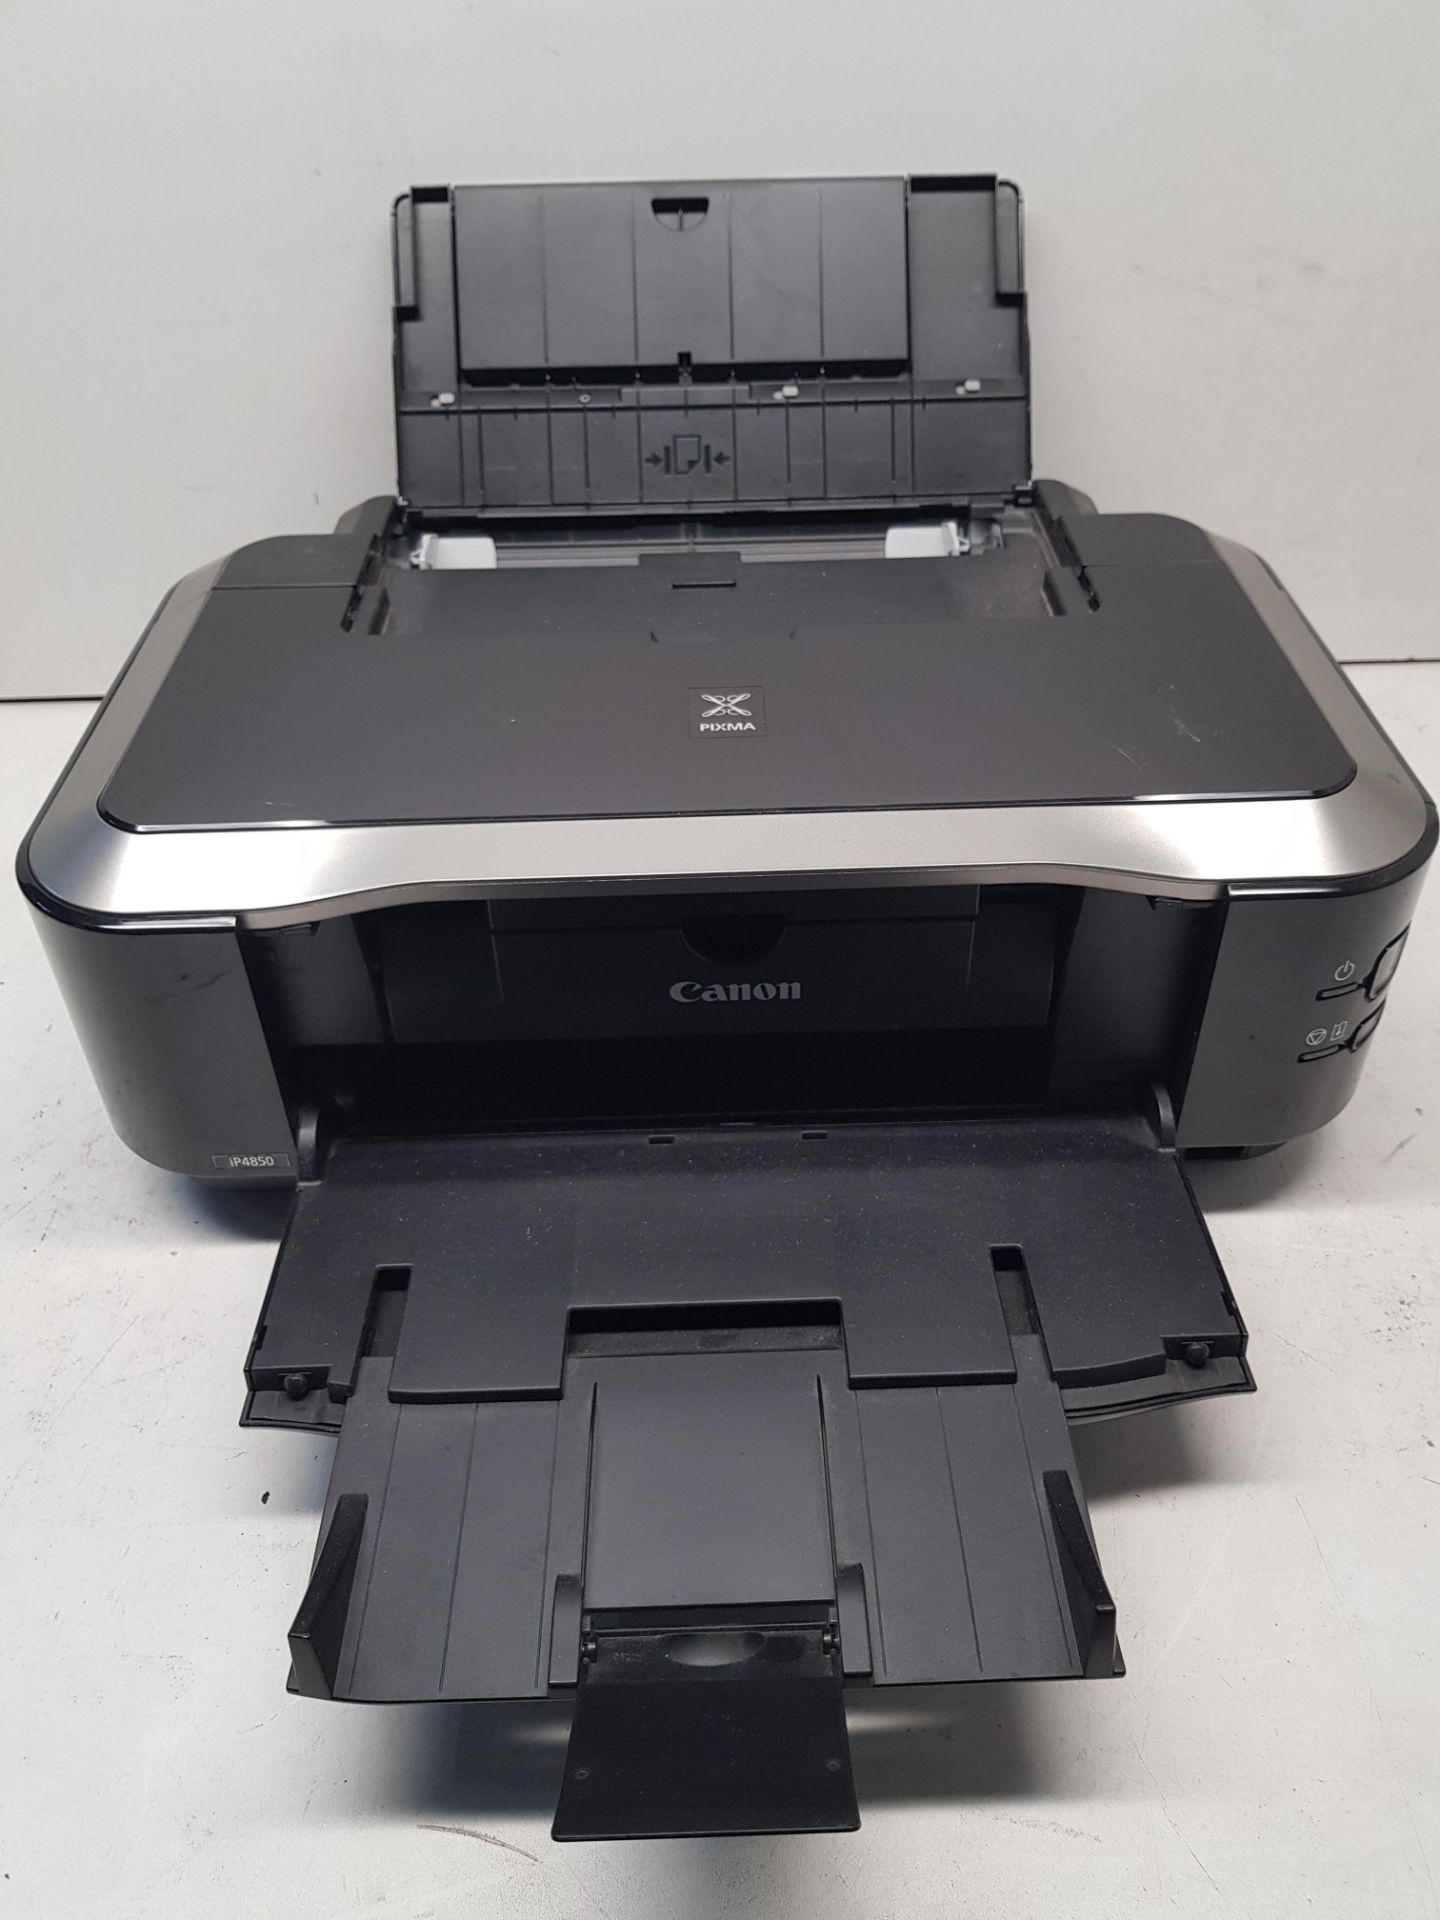 Canon Printer IP4850 Digital Printer Model: K10357 - Image 2 of 3